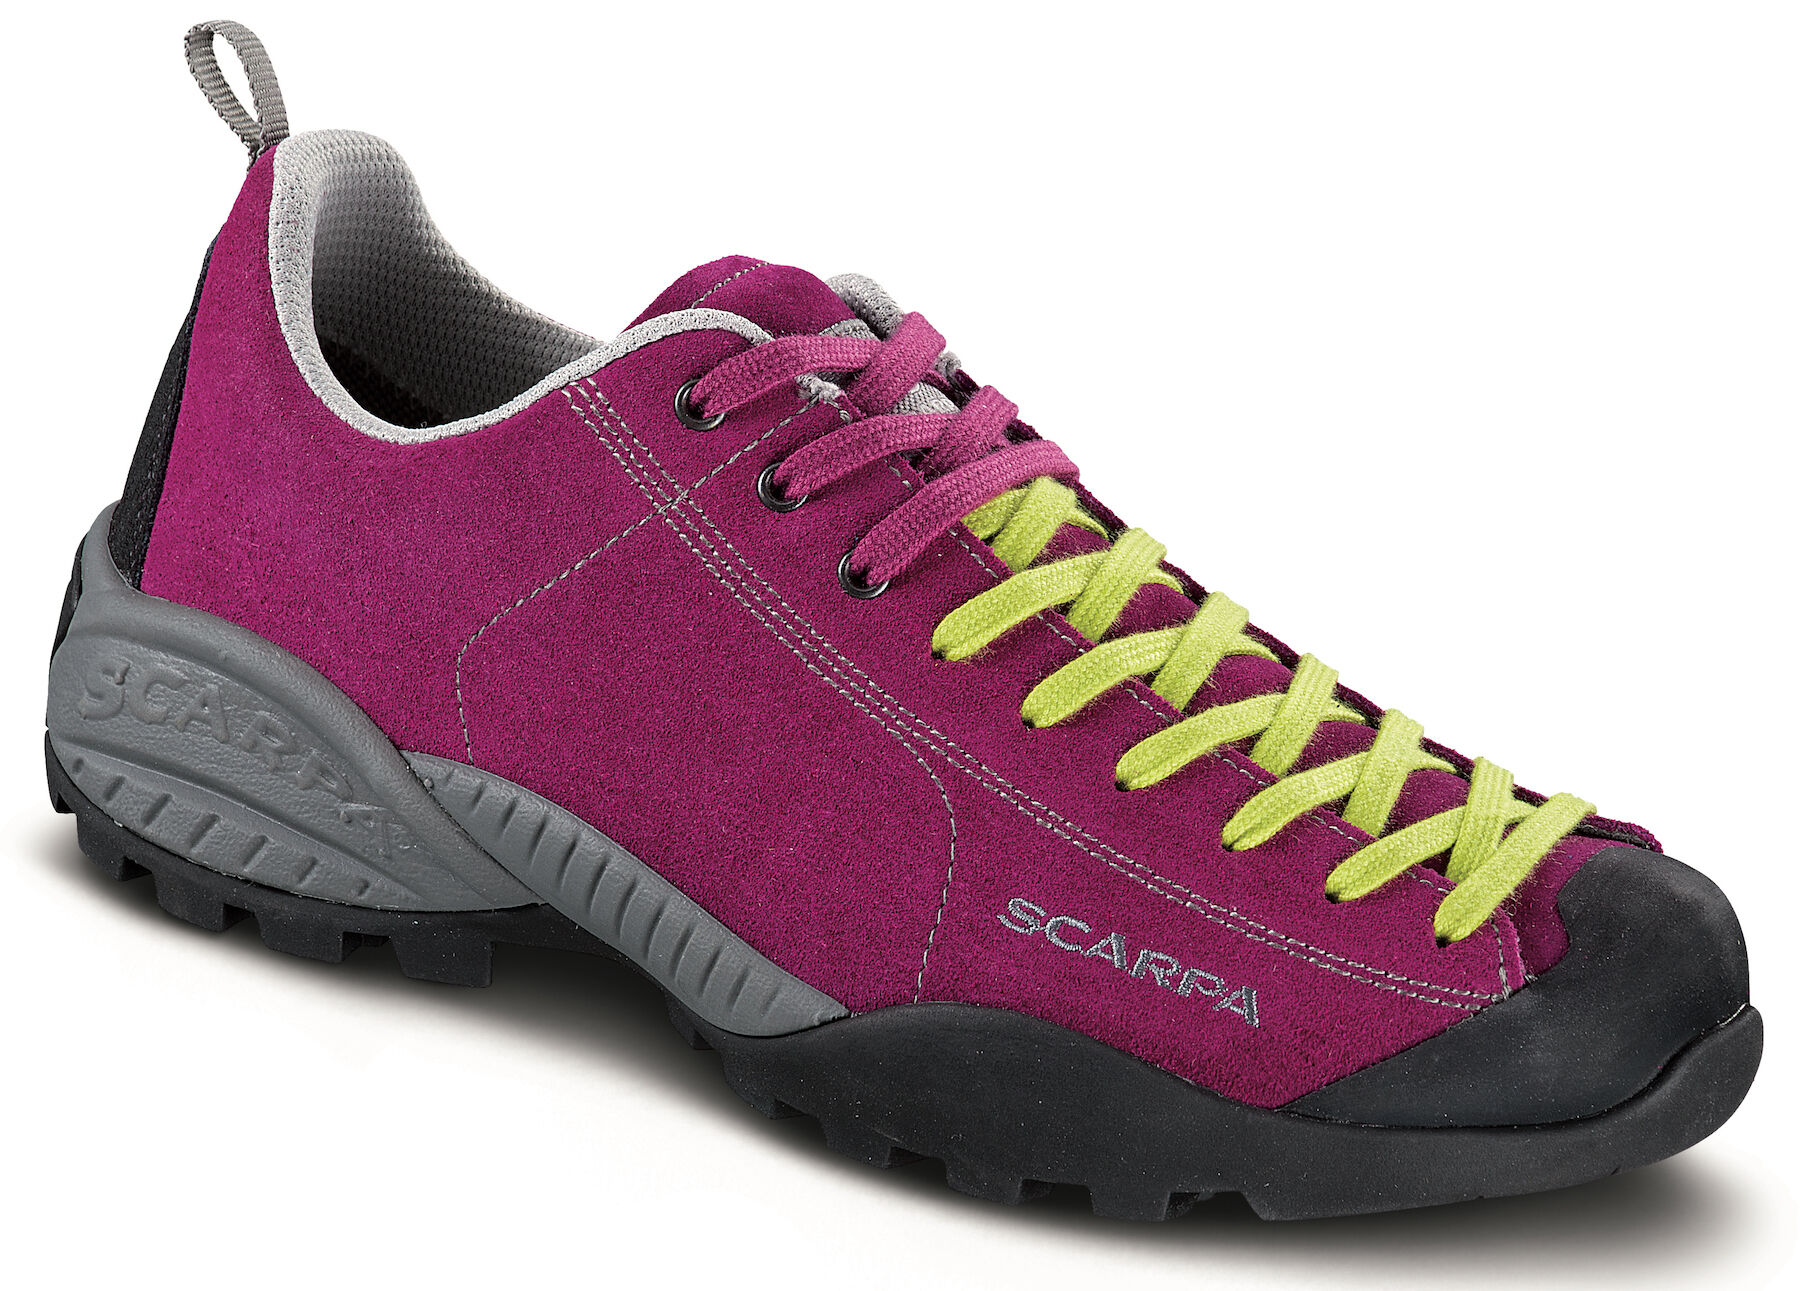 Scarpa - Mojito GTX Wmn - Walking boots - Women's